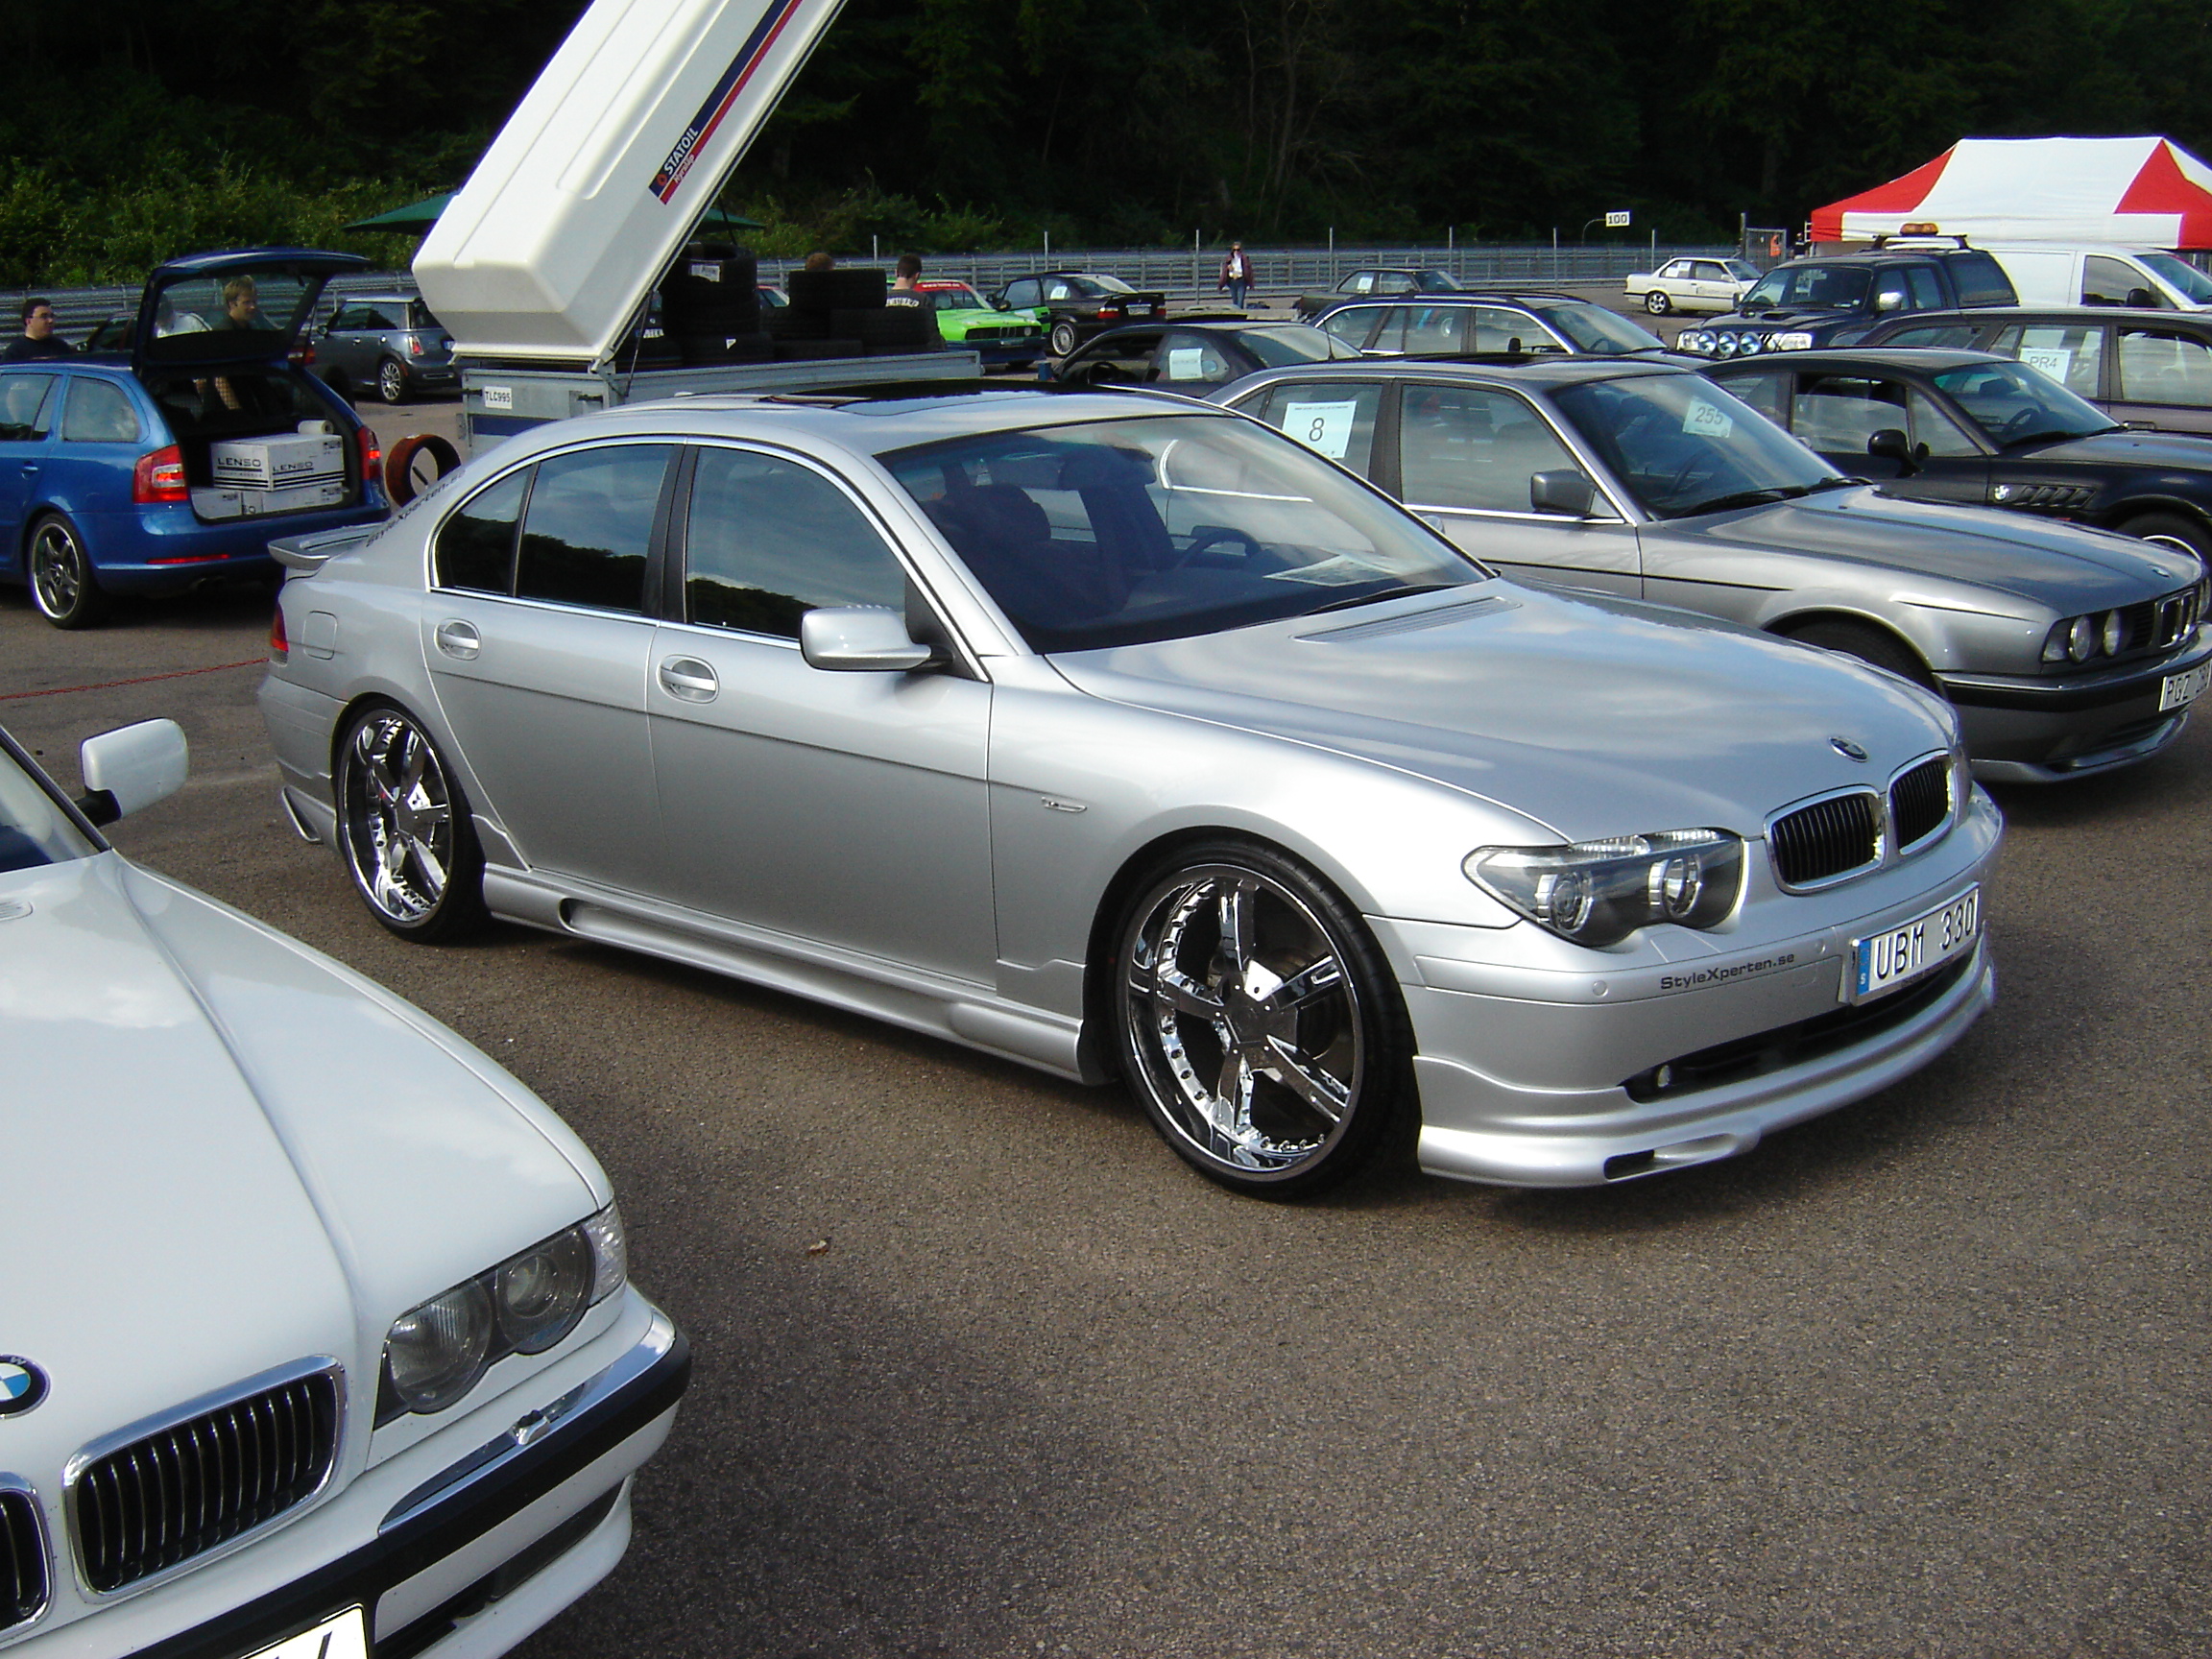 BMW 745i | Flickr - Photo Sharing!